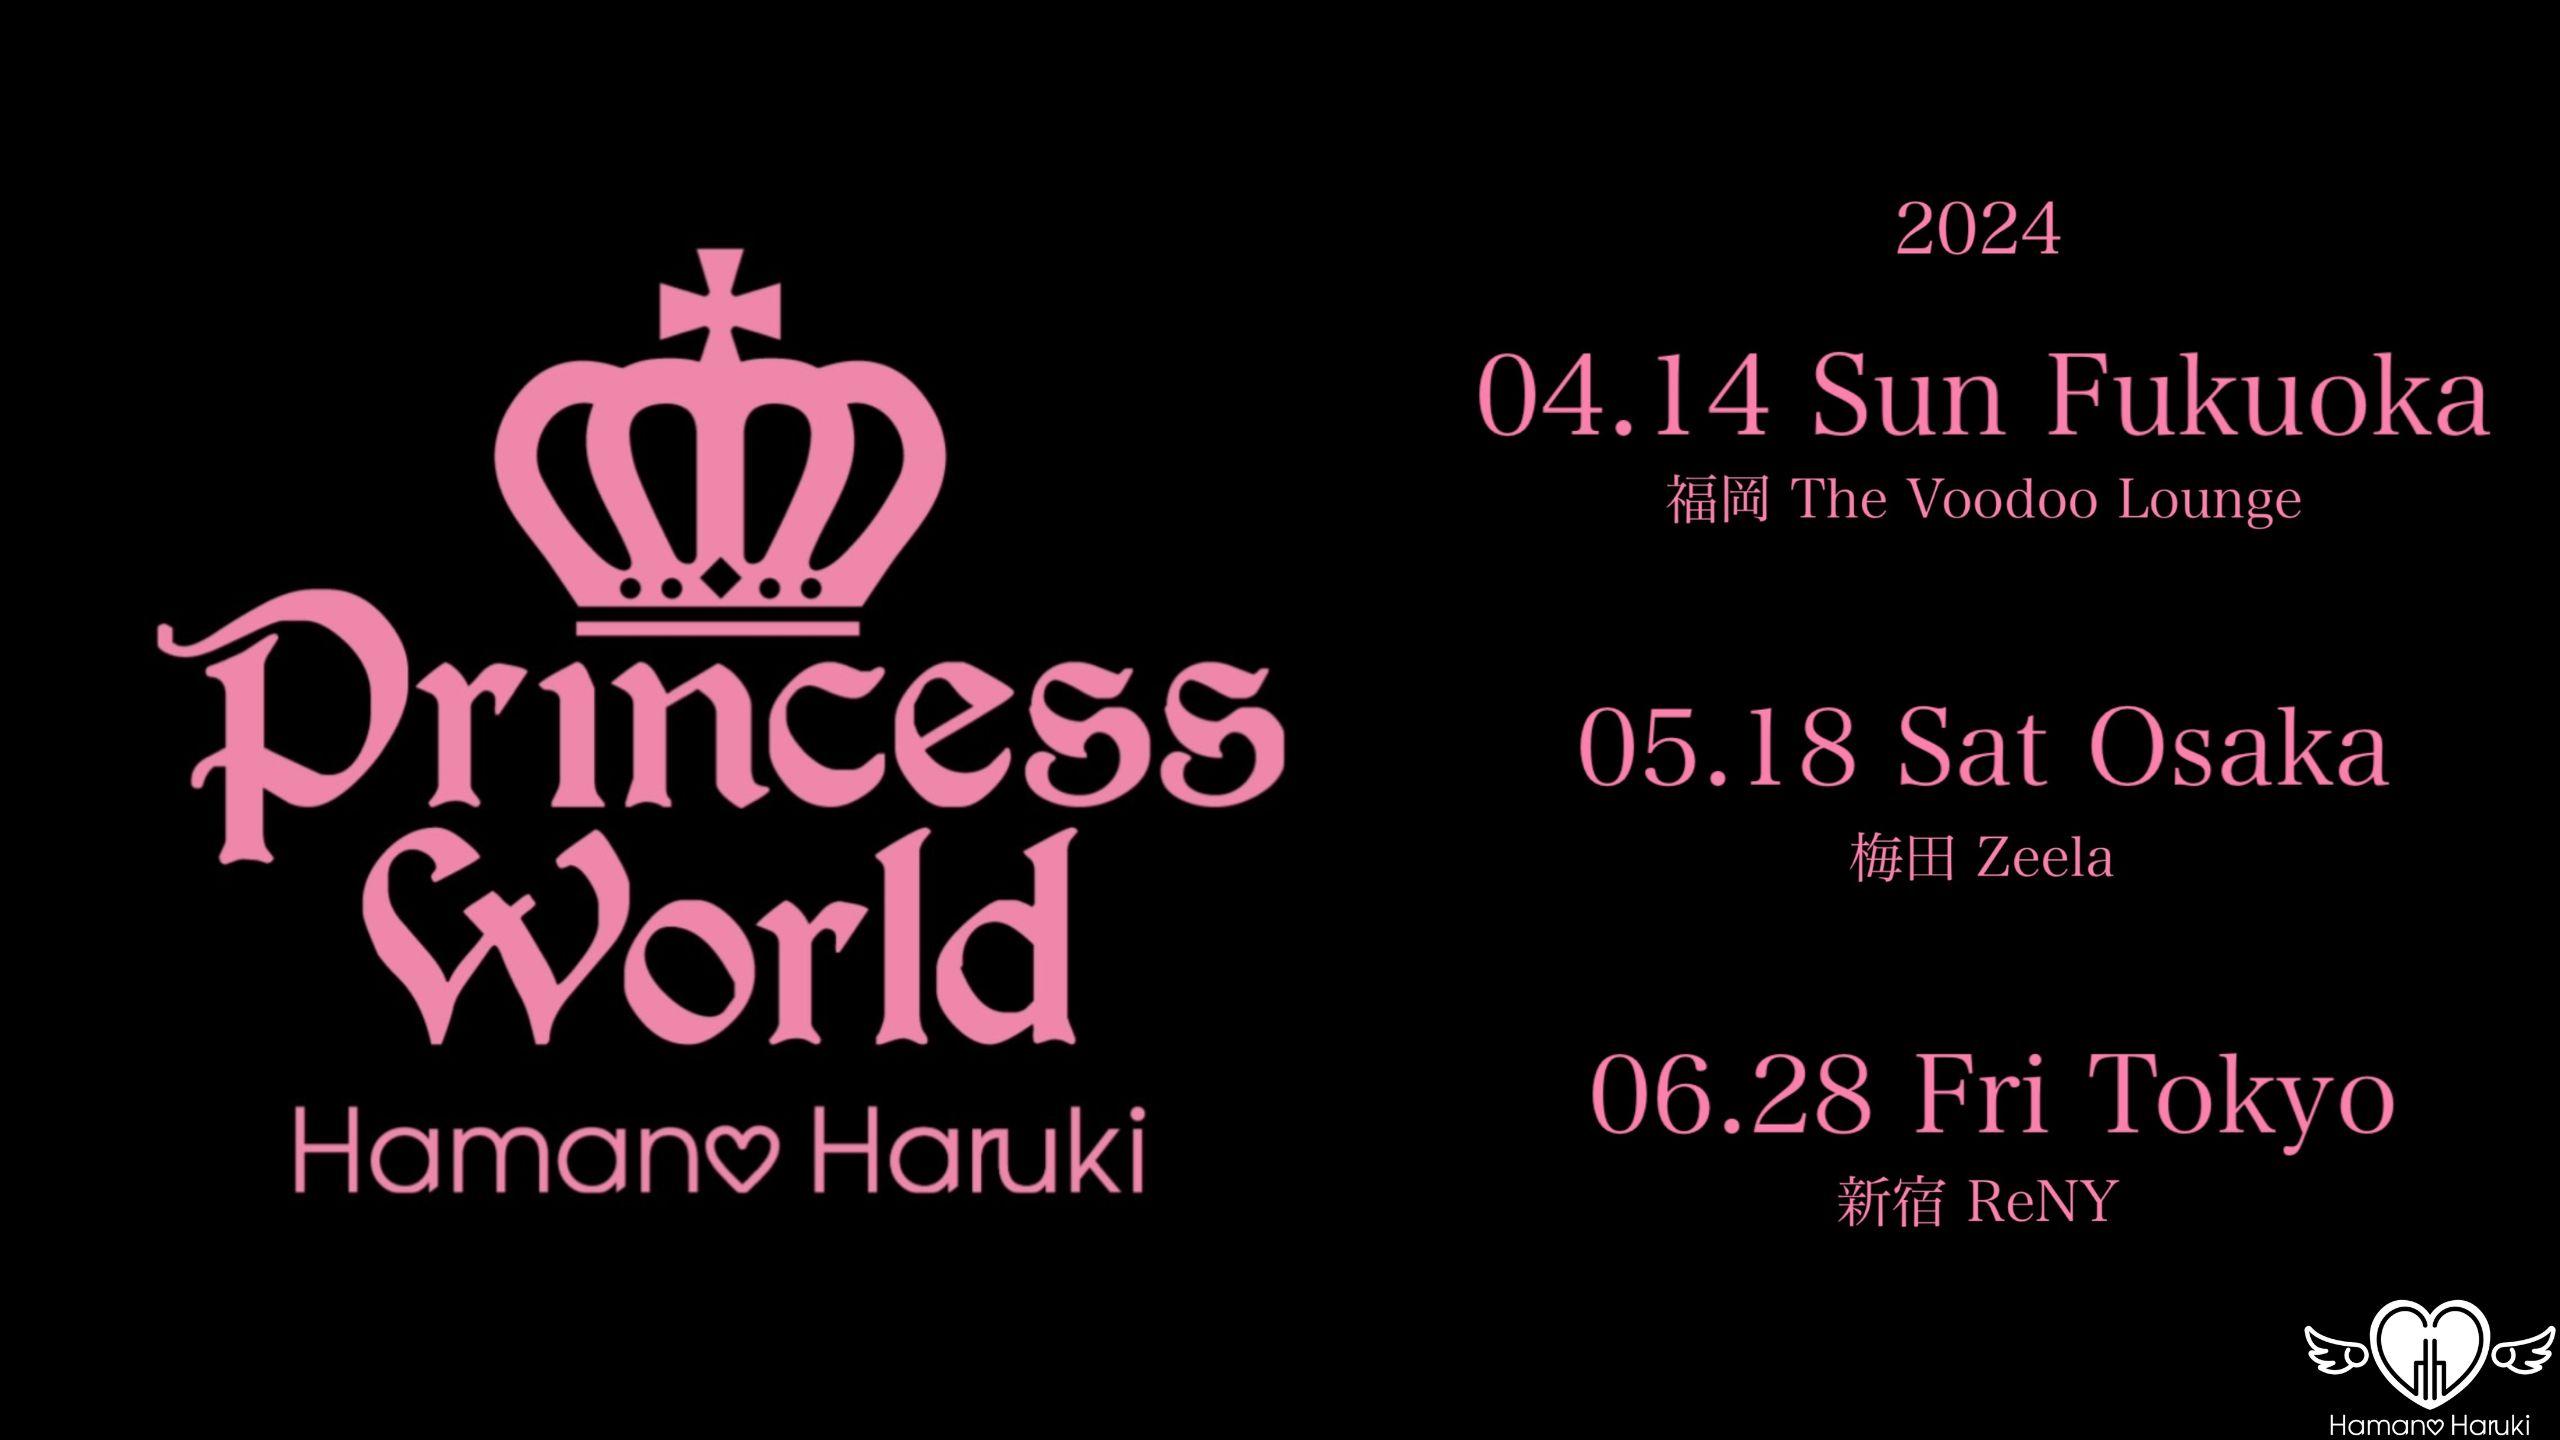 1st TOUR "Princess World"